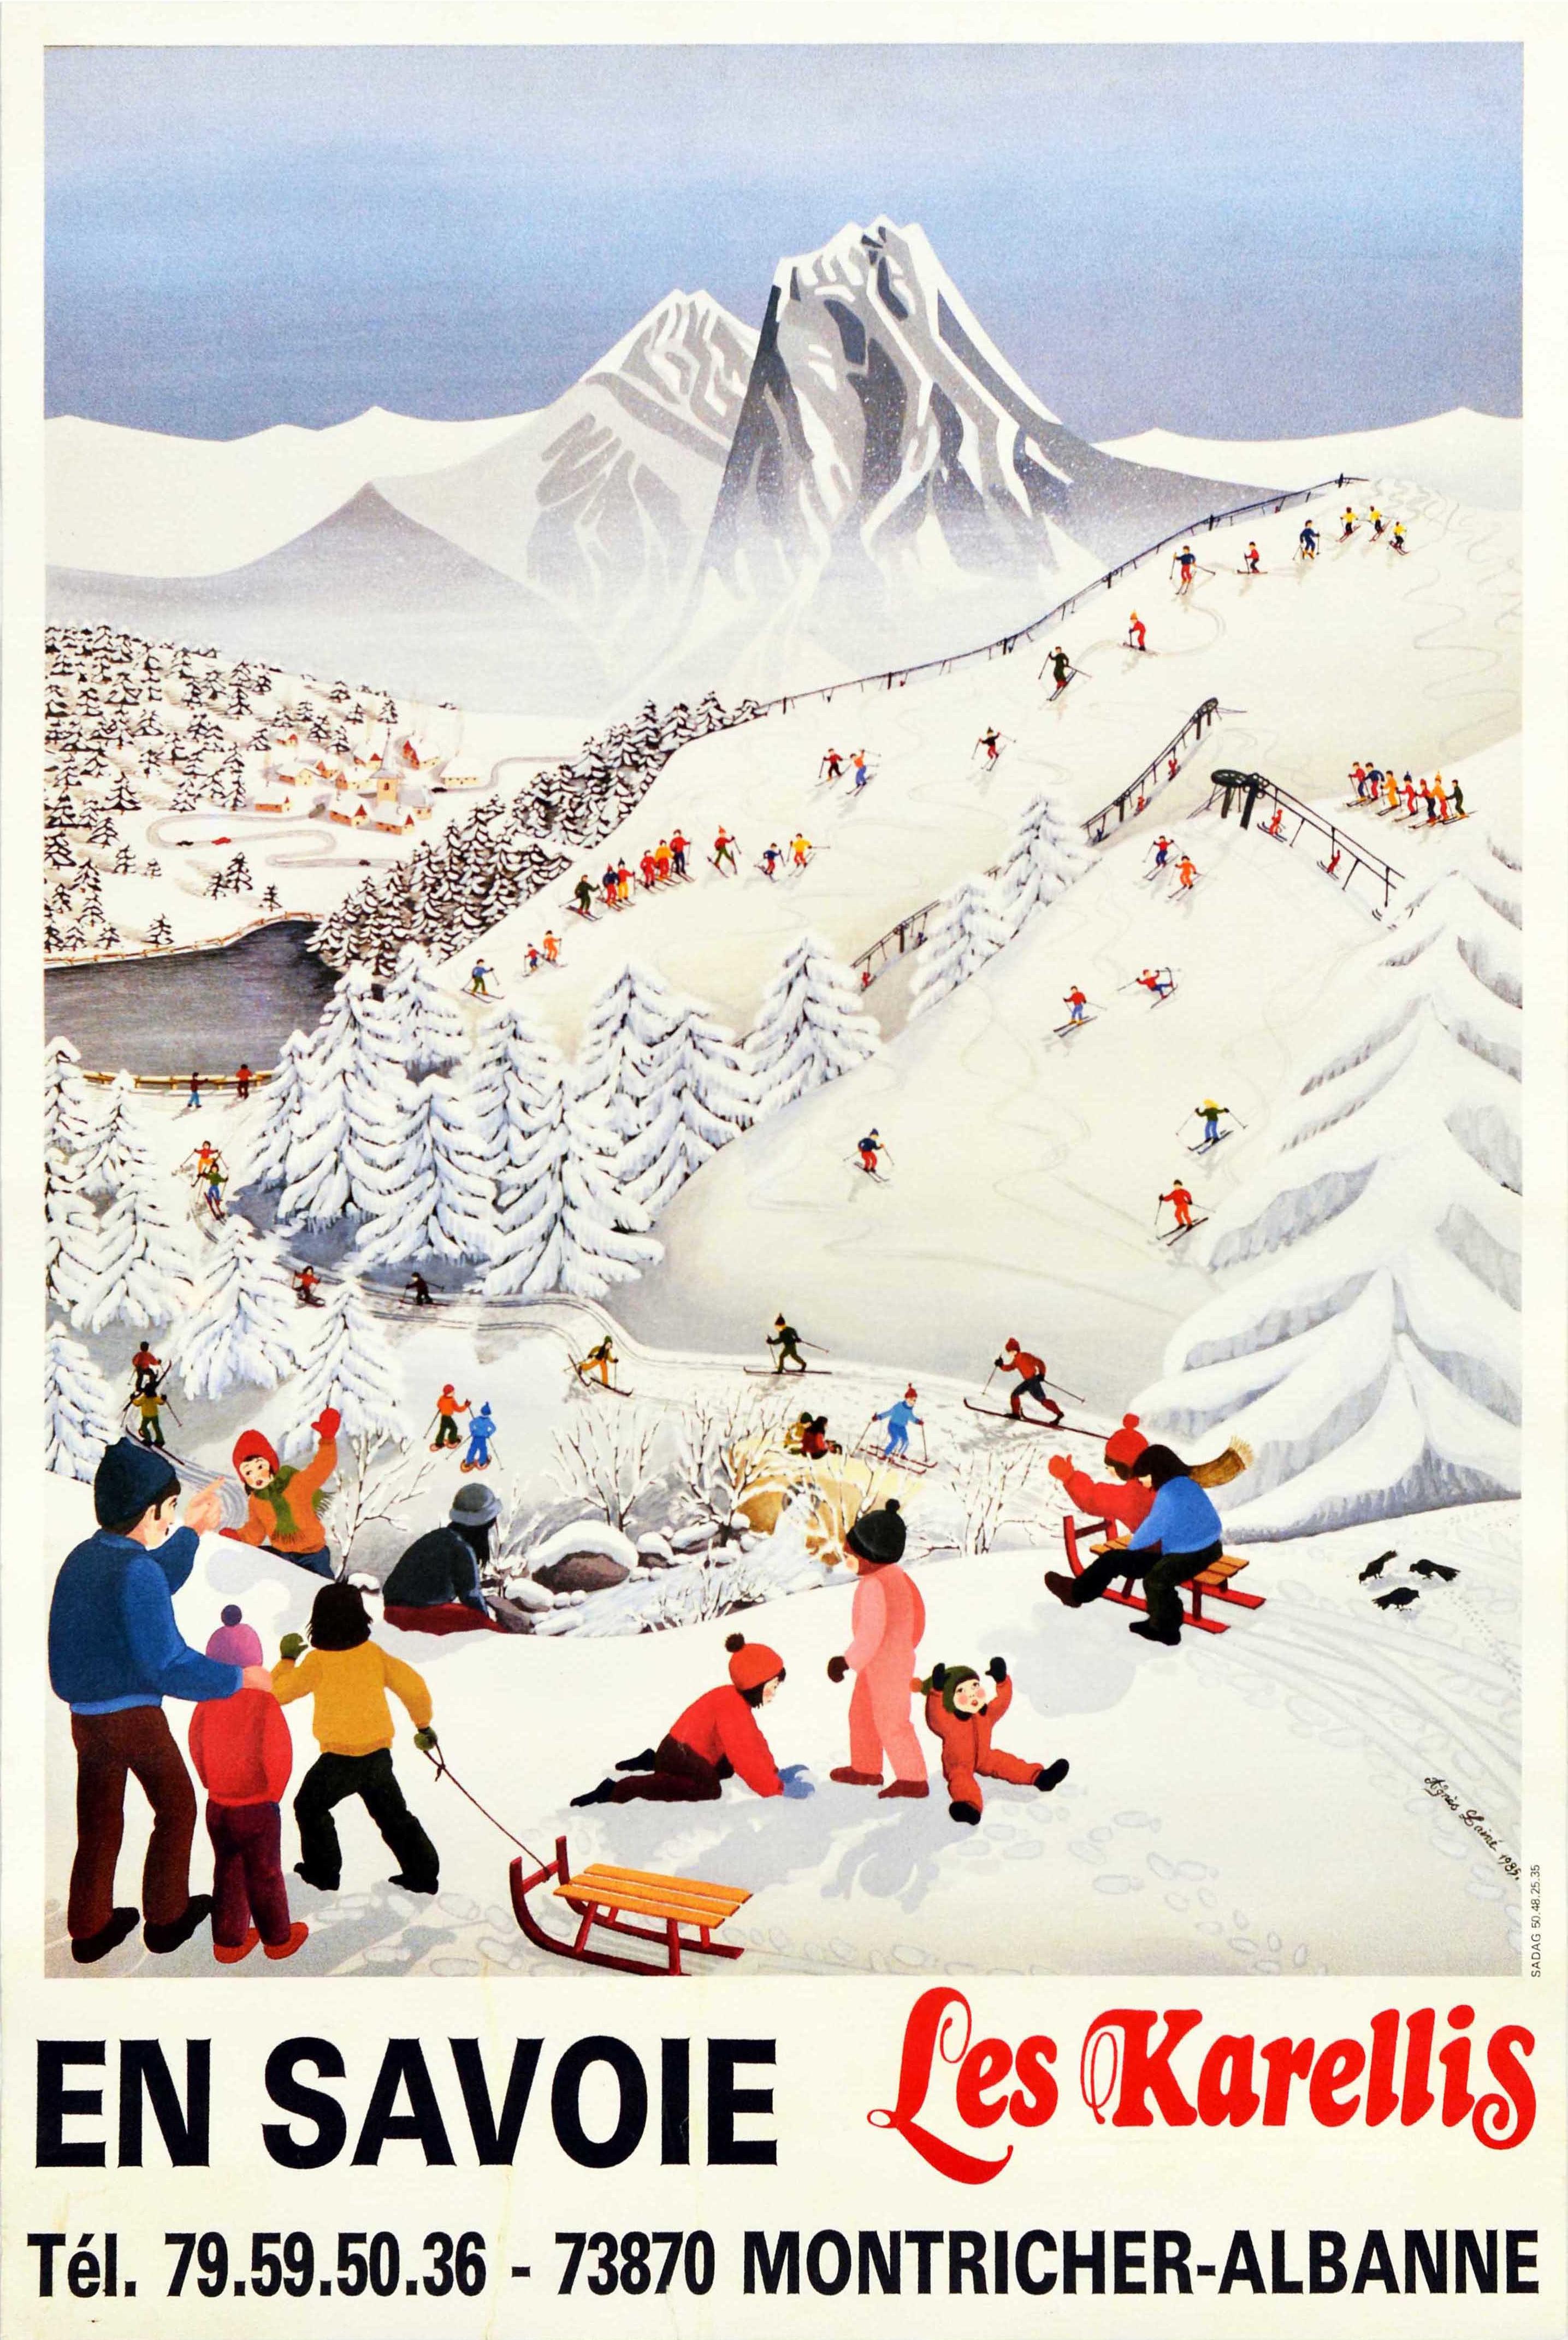 Unknown Print - Original Vintage Winter Sport Travel Poster En Savoie Les Karellis Ski Resort